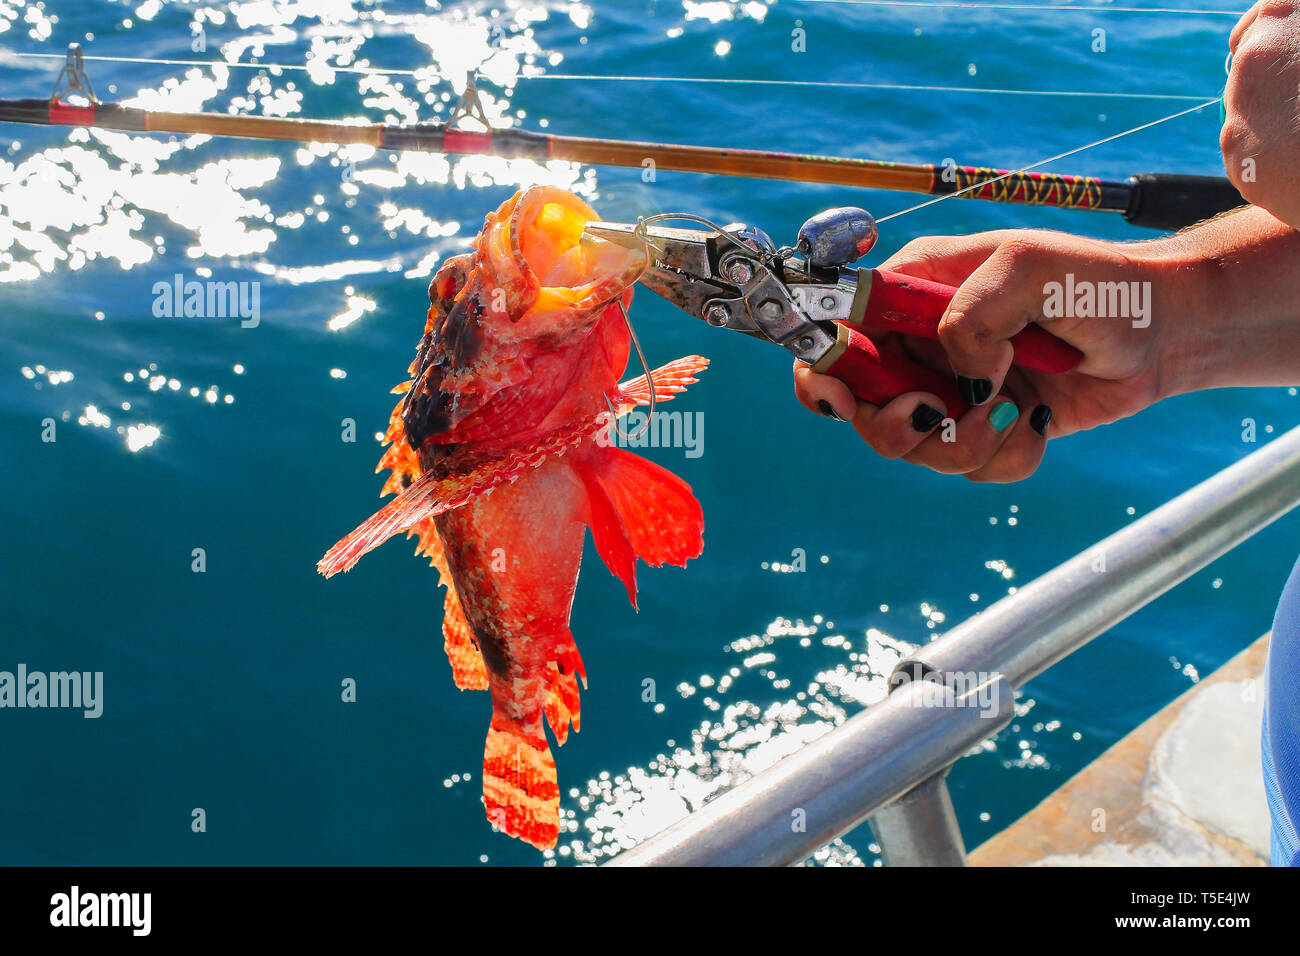 Catch a Fire fish when deep - sea fishing Stock Photo